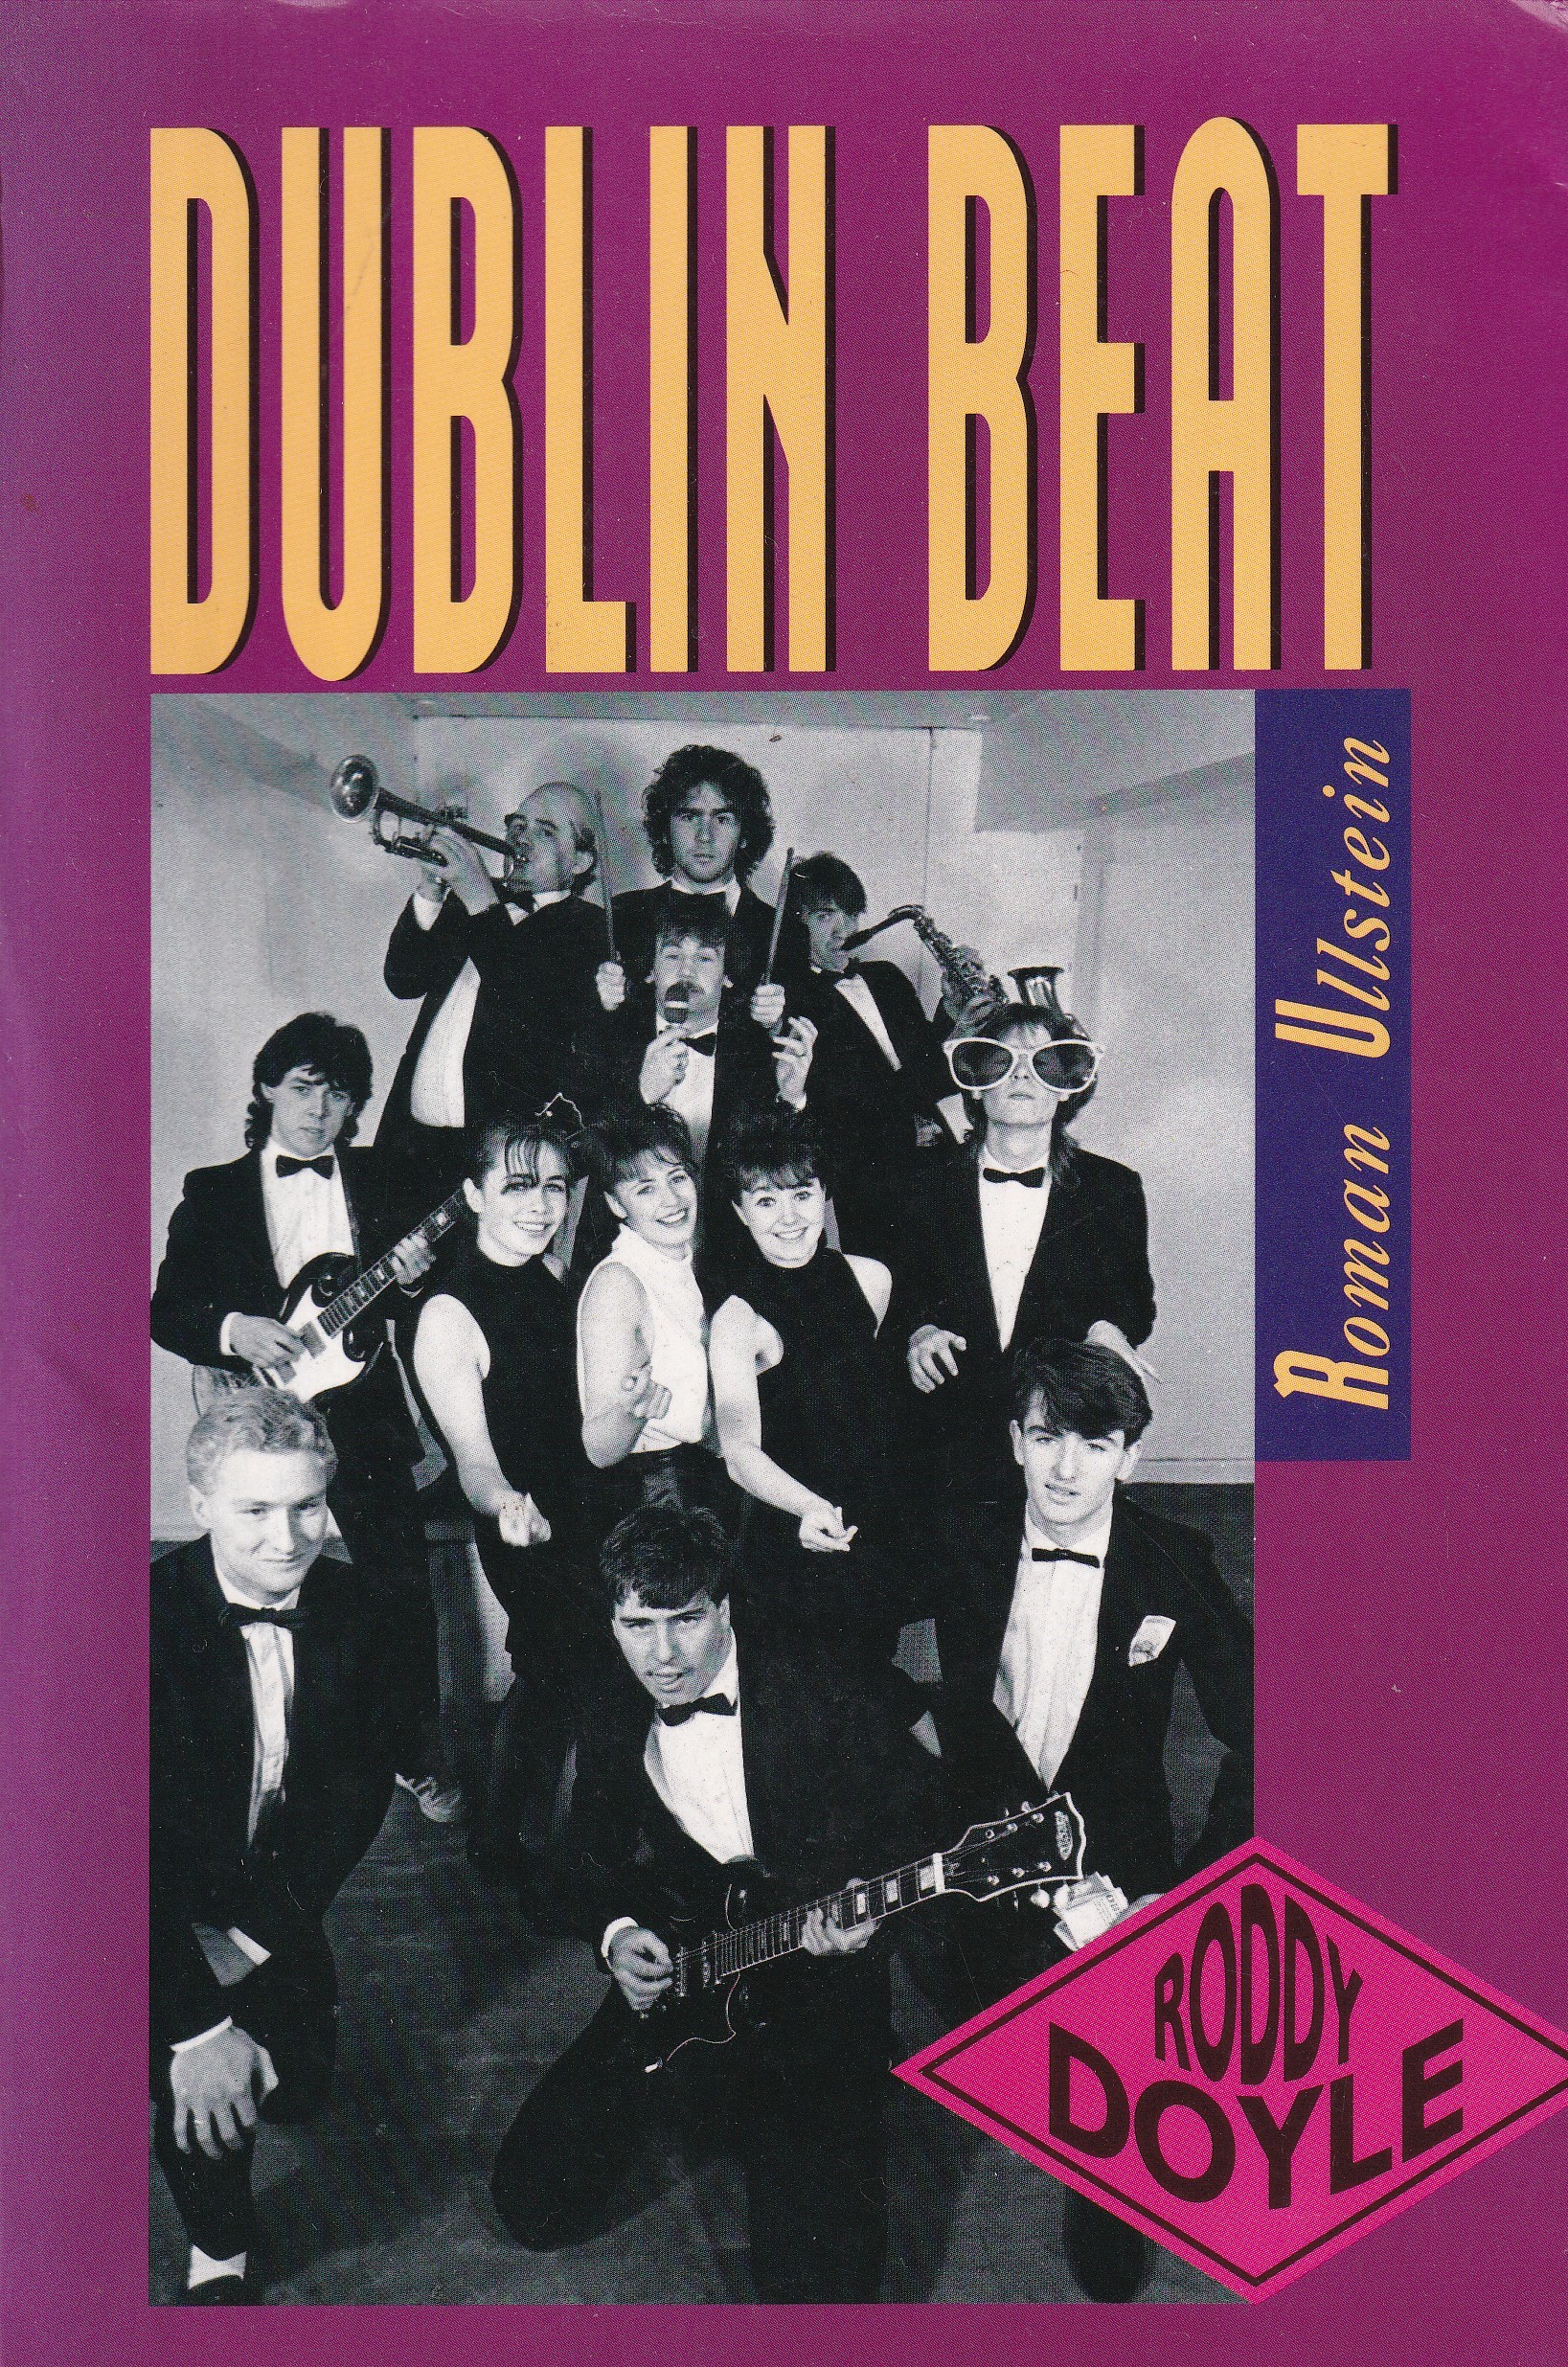 Dublin Beat- German Translation by Roddy Doyle